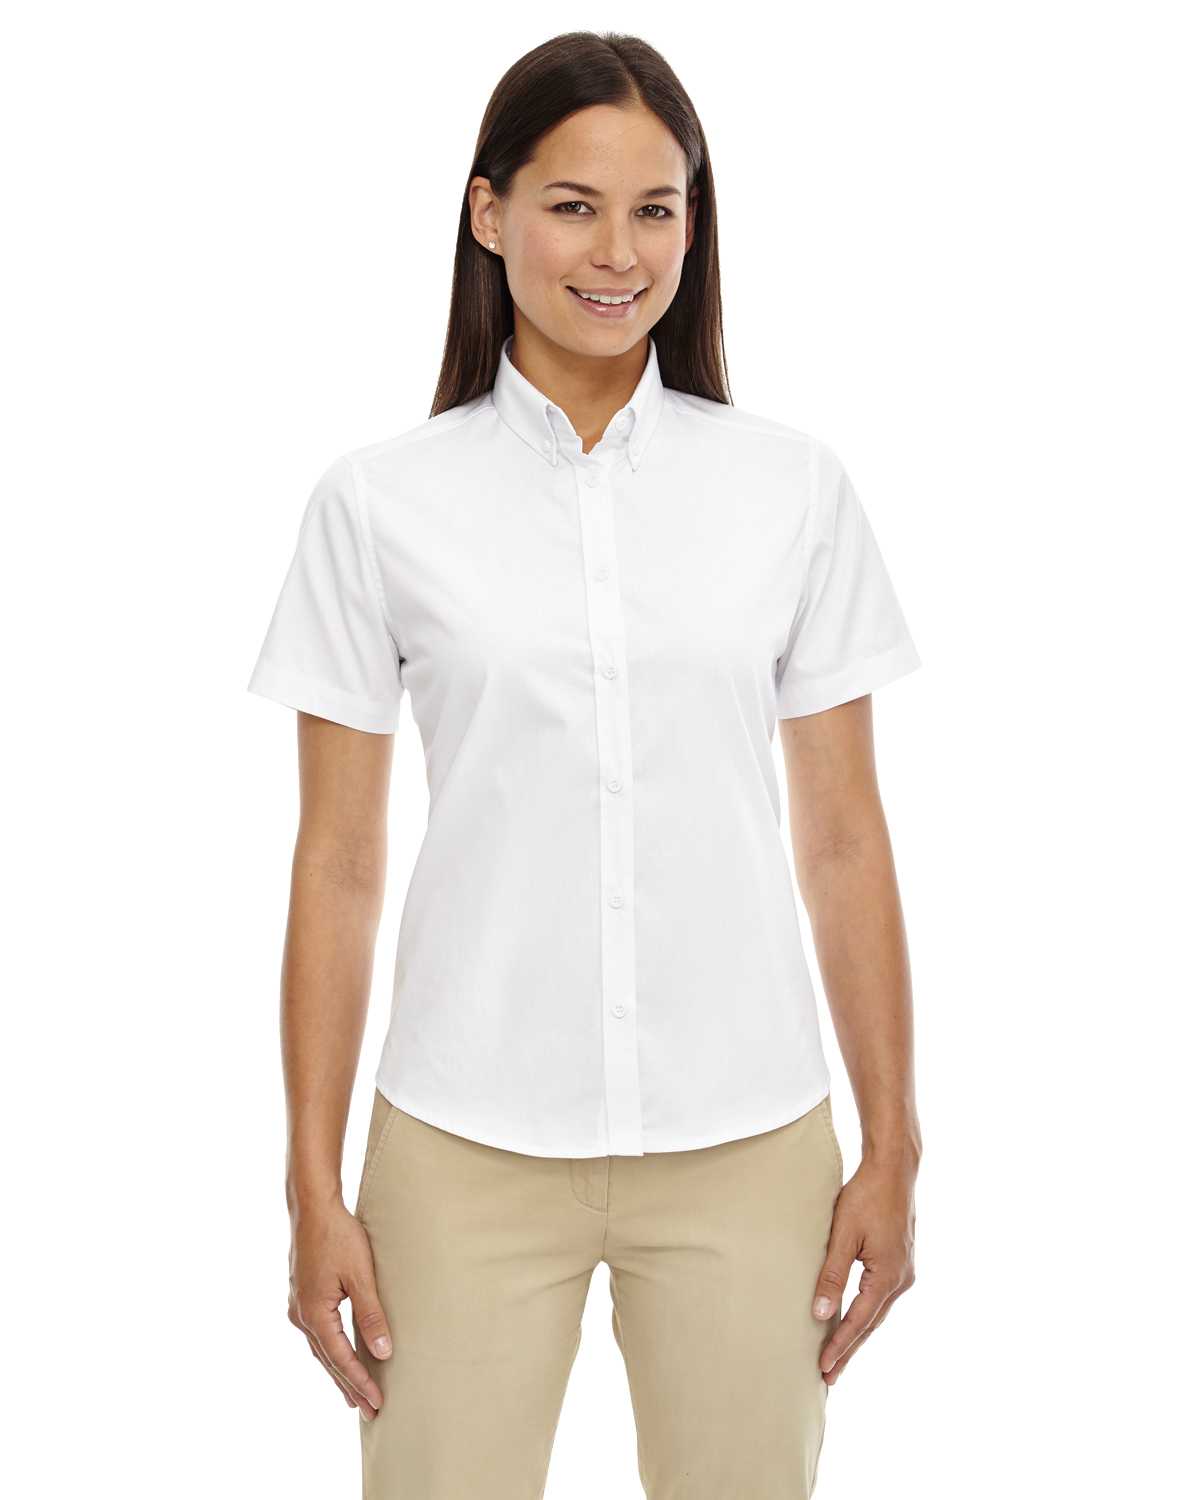 Core365 78194 Ladies' Optimum Short-Sleeve Twill Shirt | ApparelChoice.com